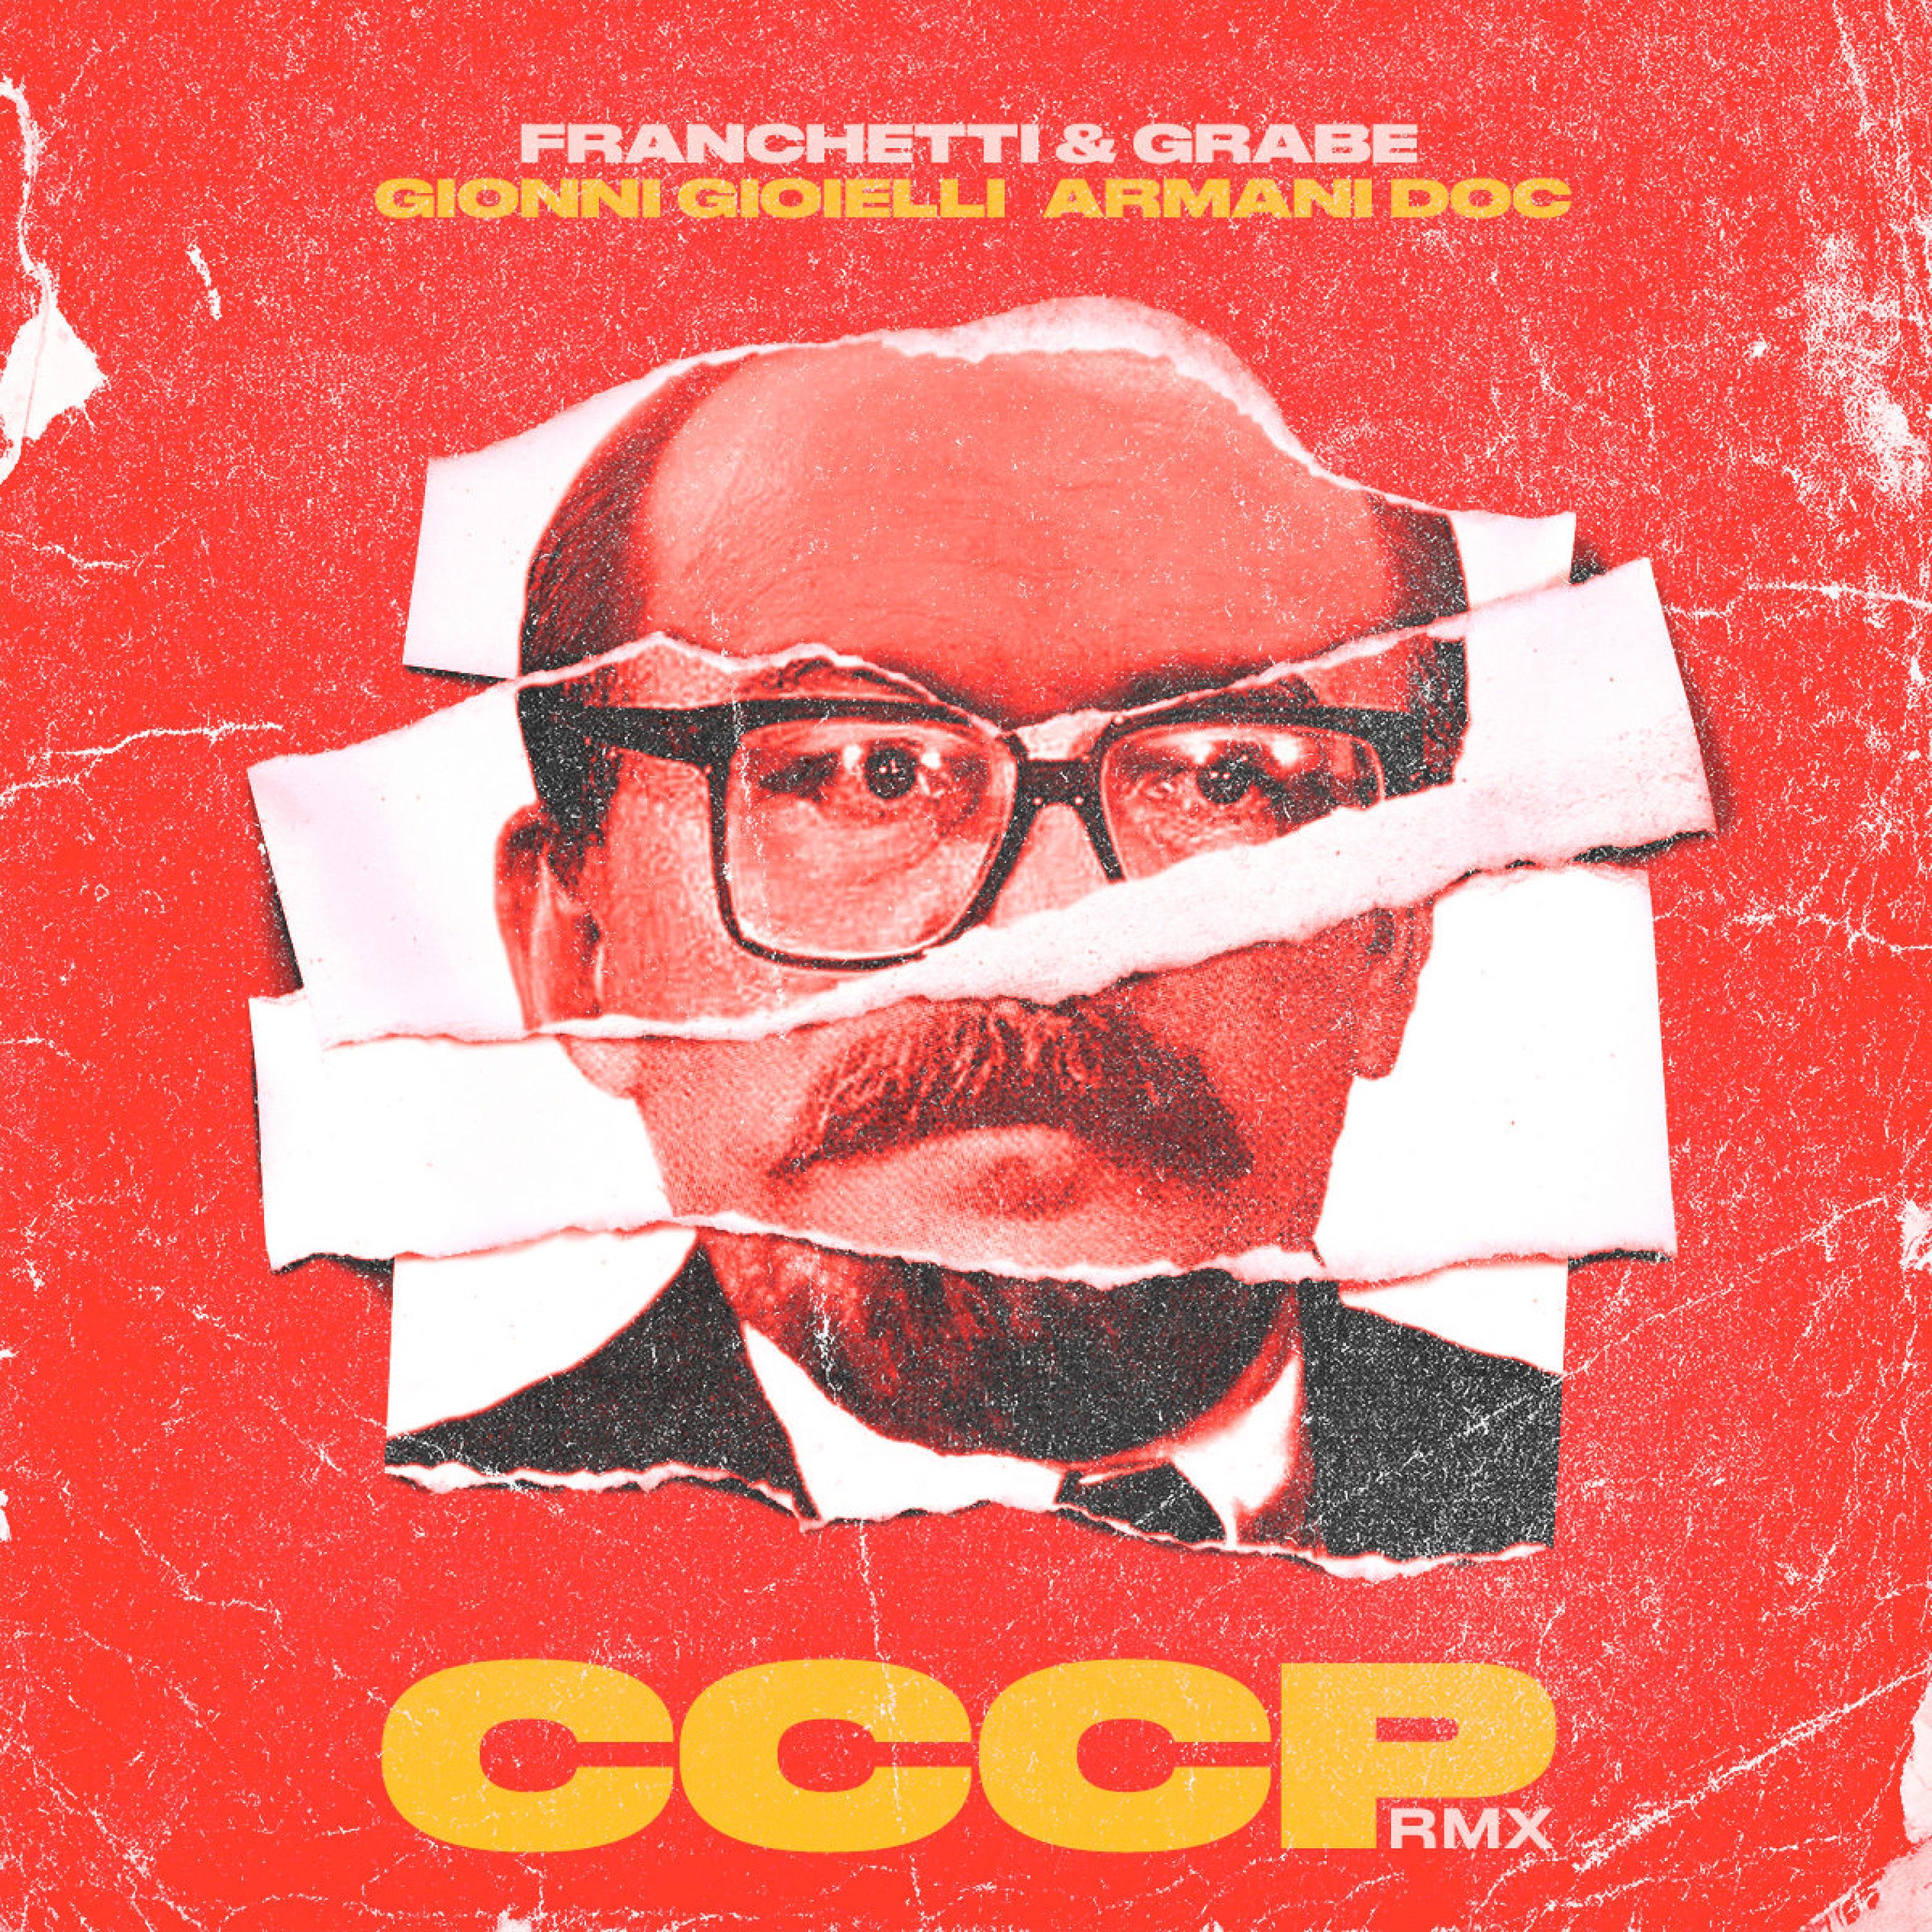 Franchetti - CCCP (feat. Gionni Gioielli & Armani Doc) (RMX)